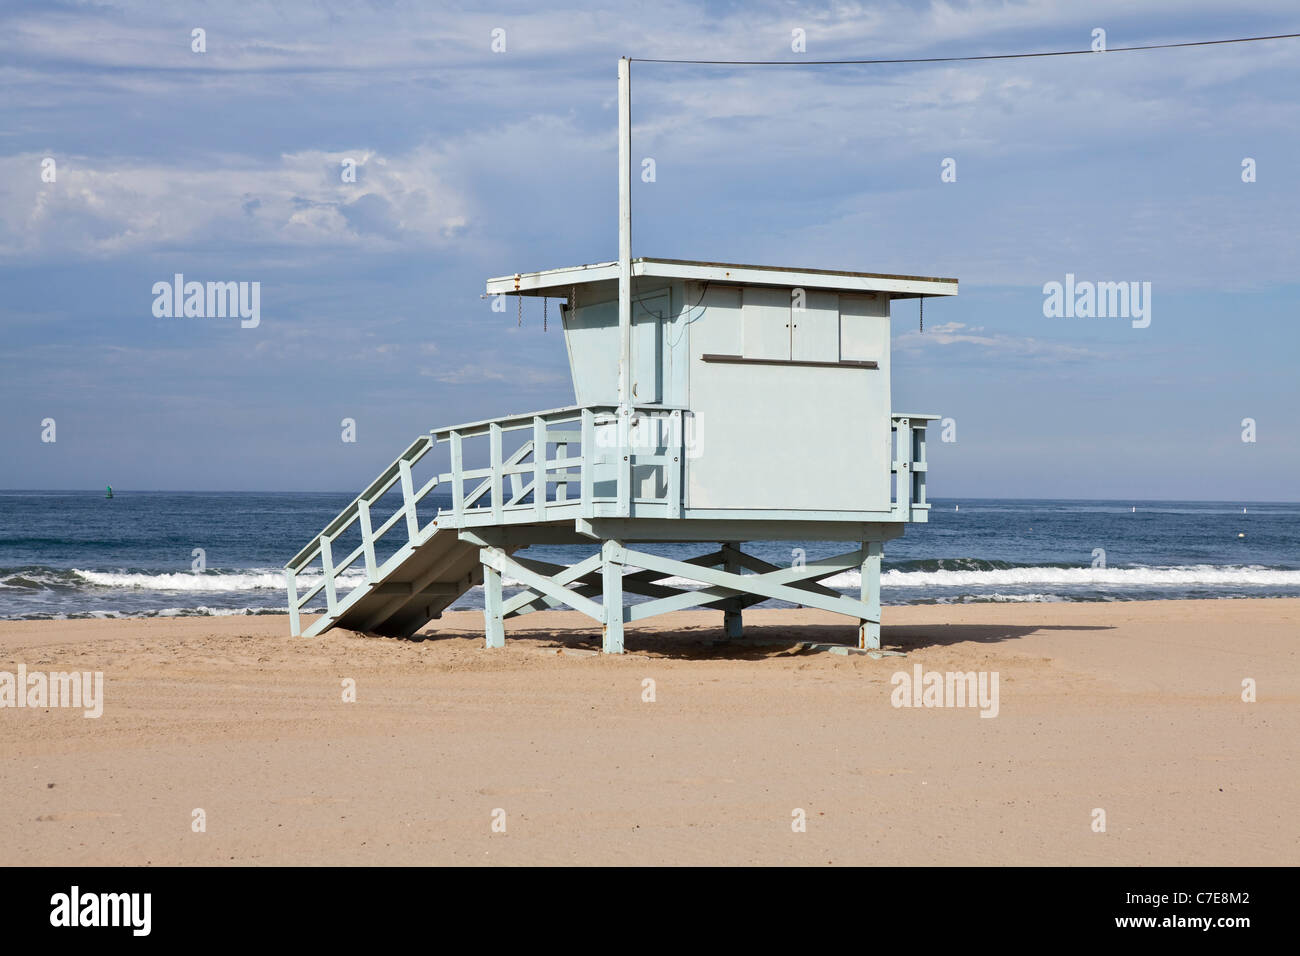 Santa Monica beach lifeguard tower in Southern California. Stock Photo